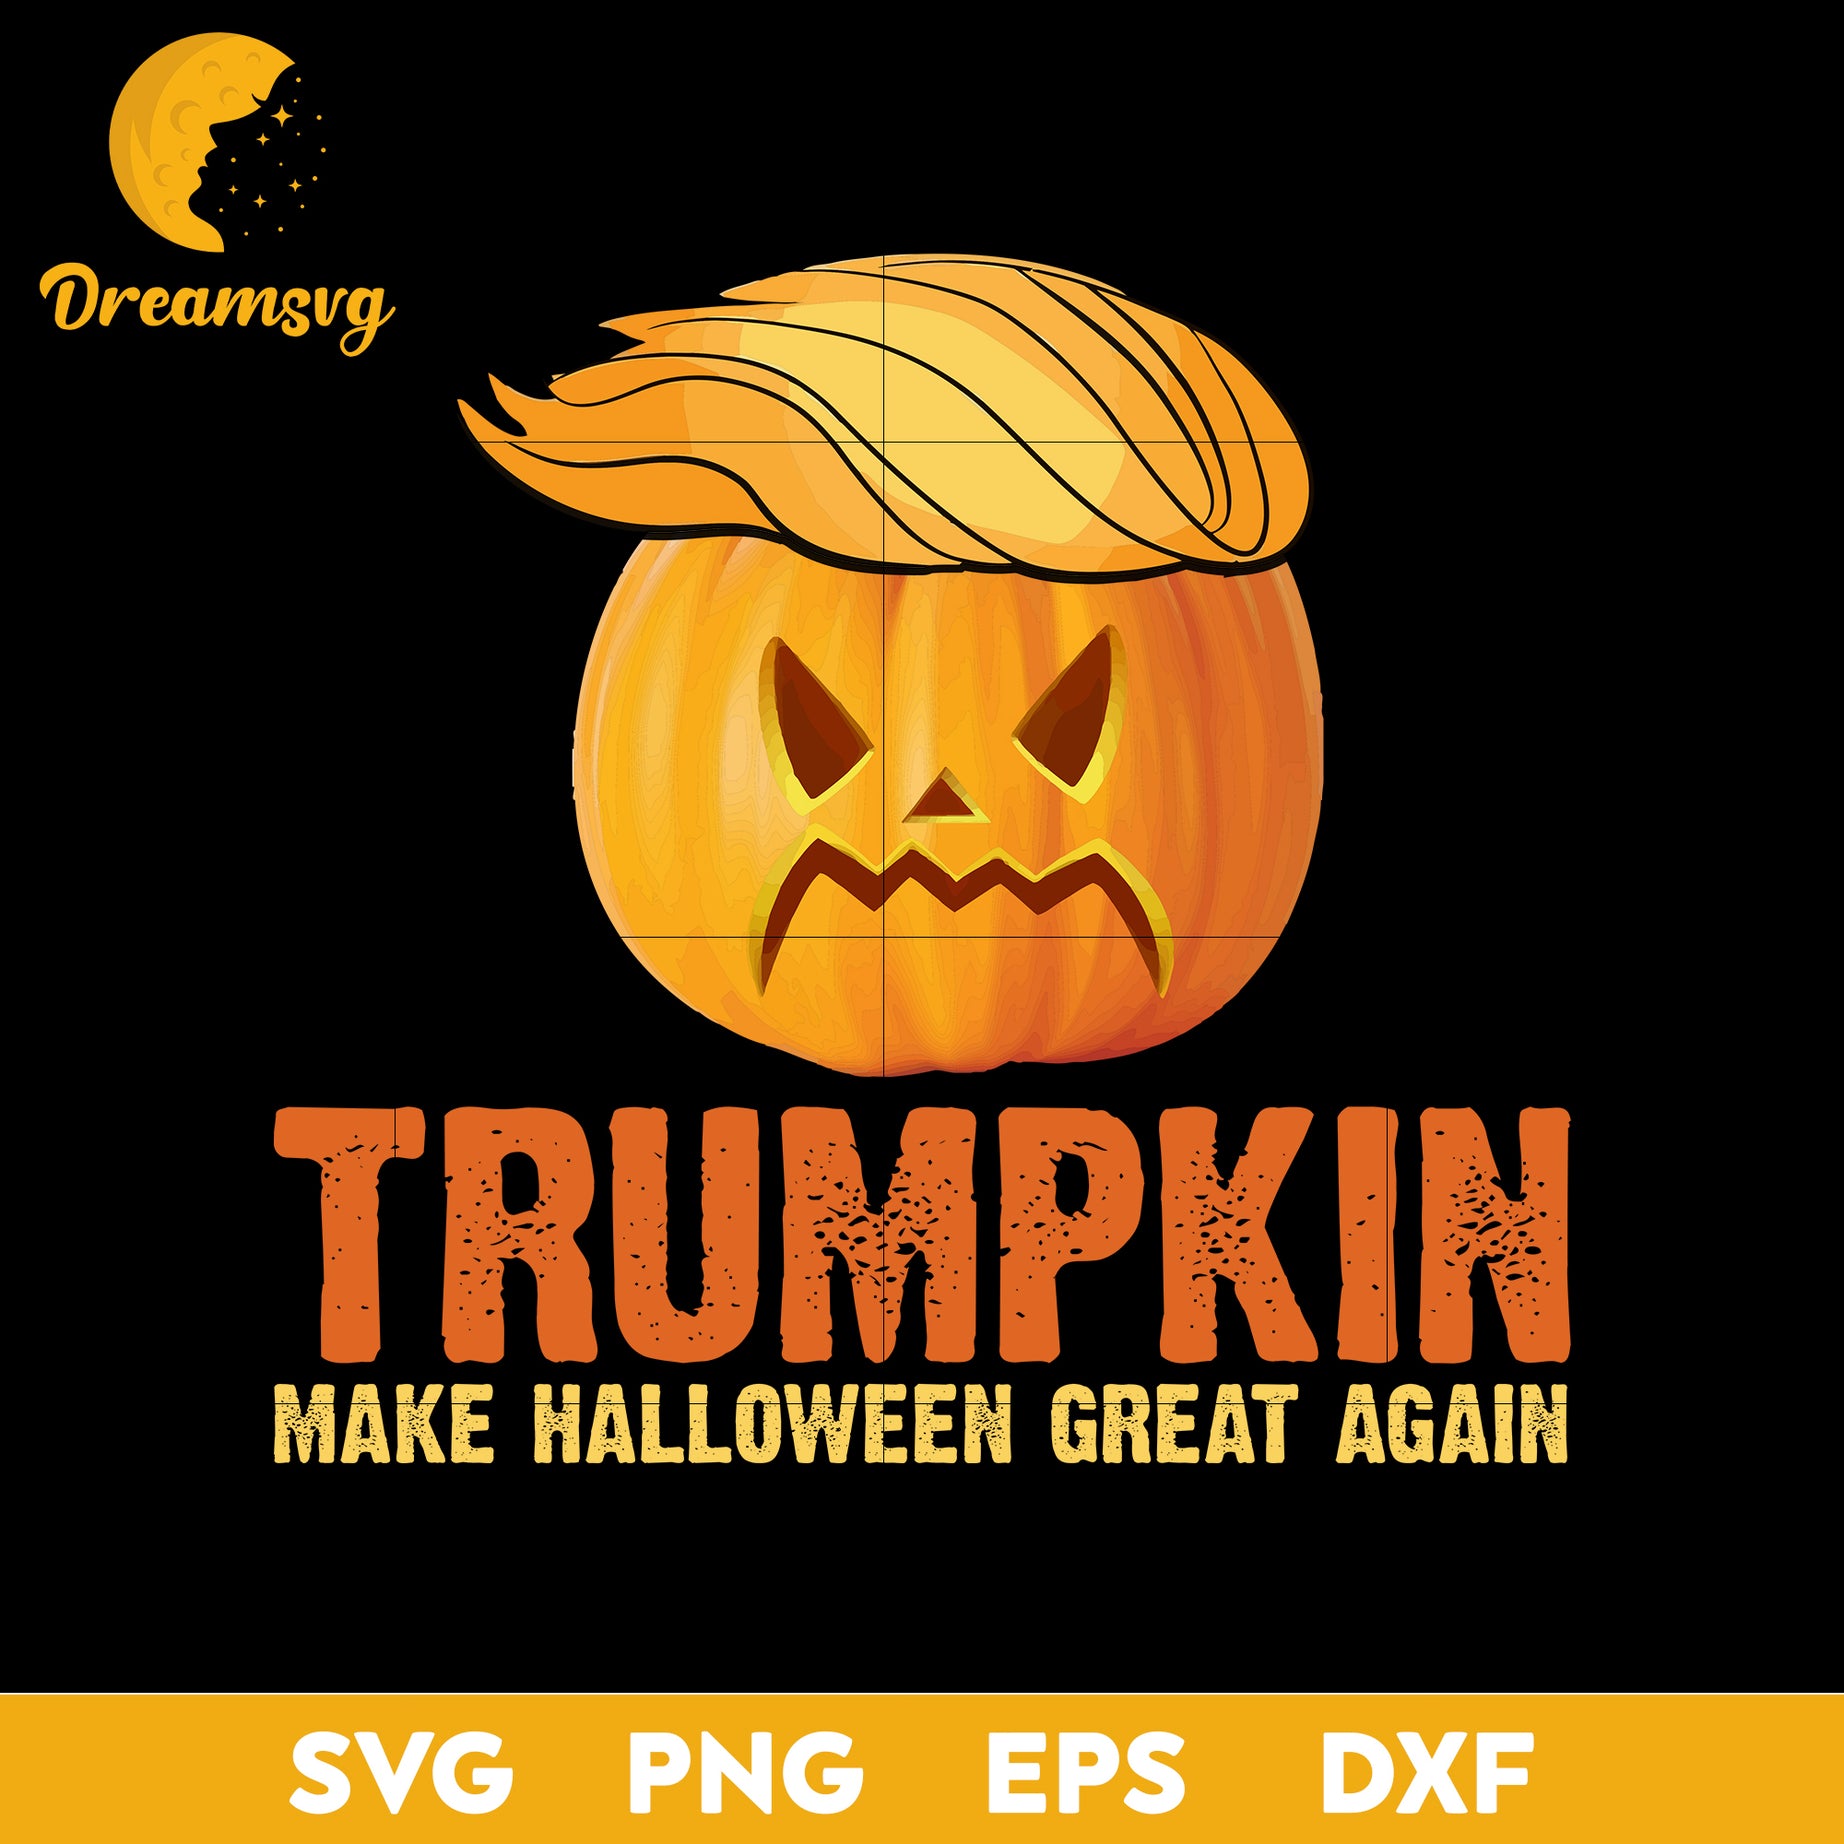 Trumpkin make halloween great again Svg, Halloween svg, png, dxf, eps digital file.